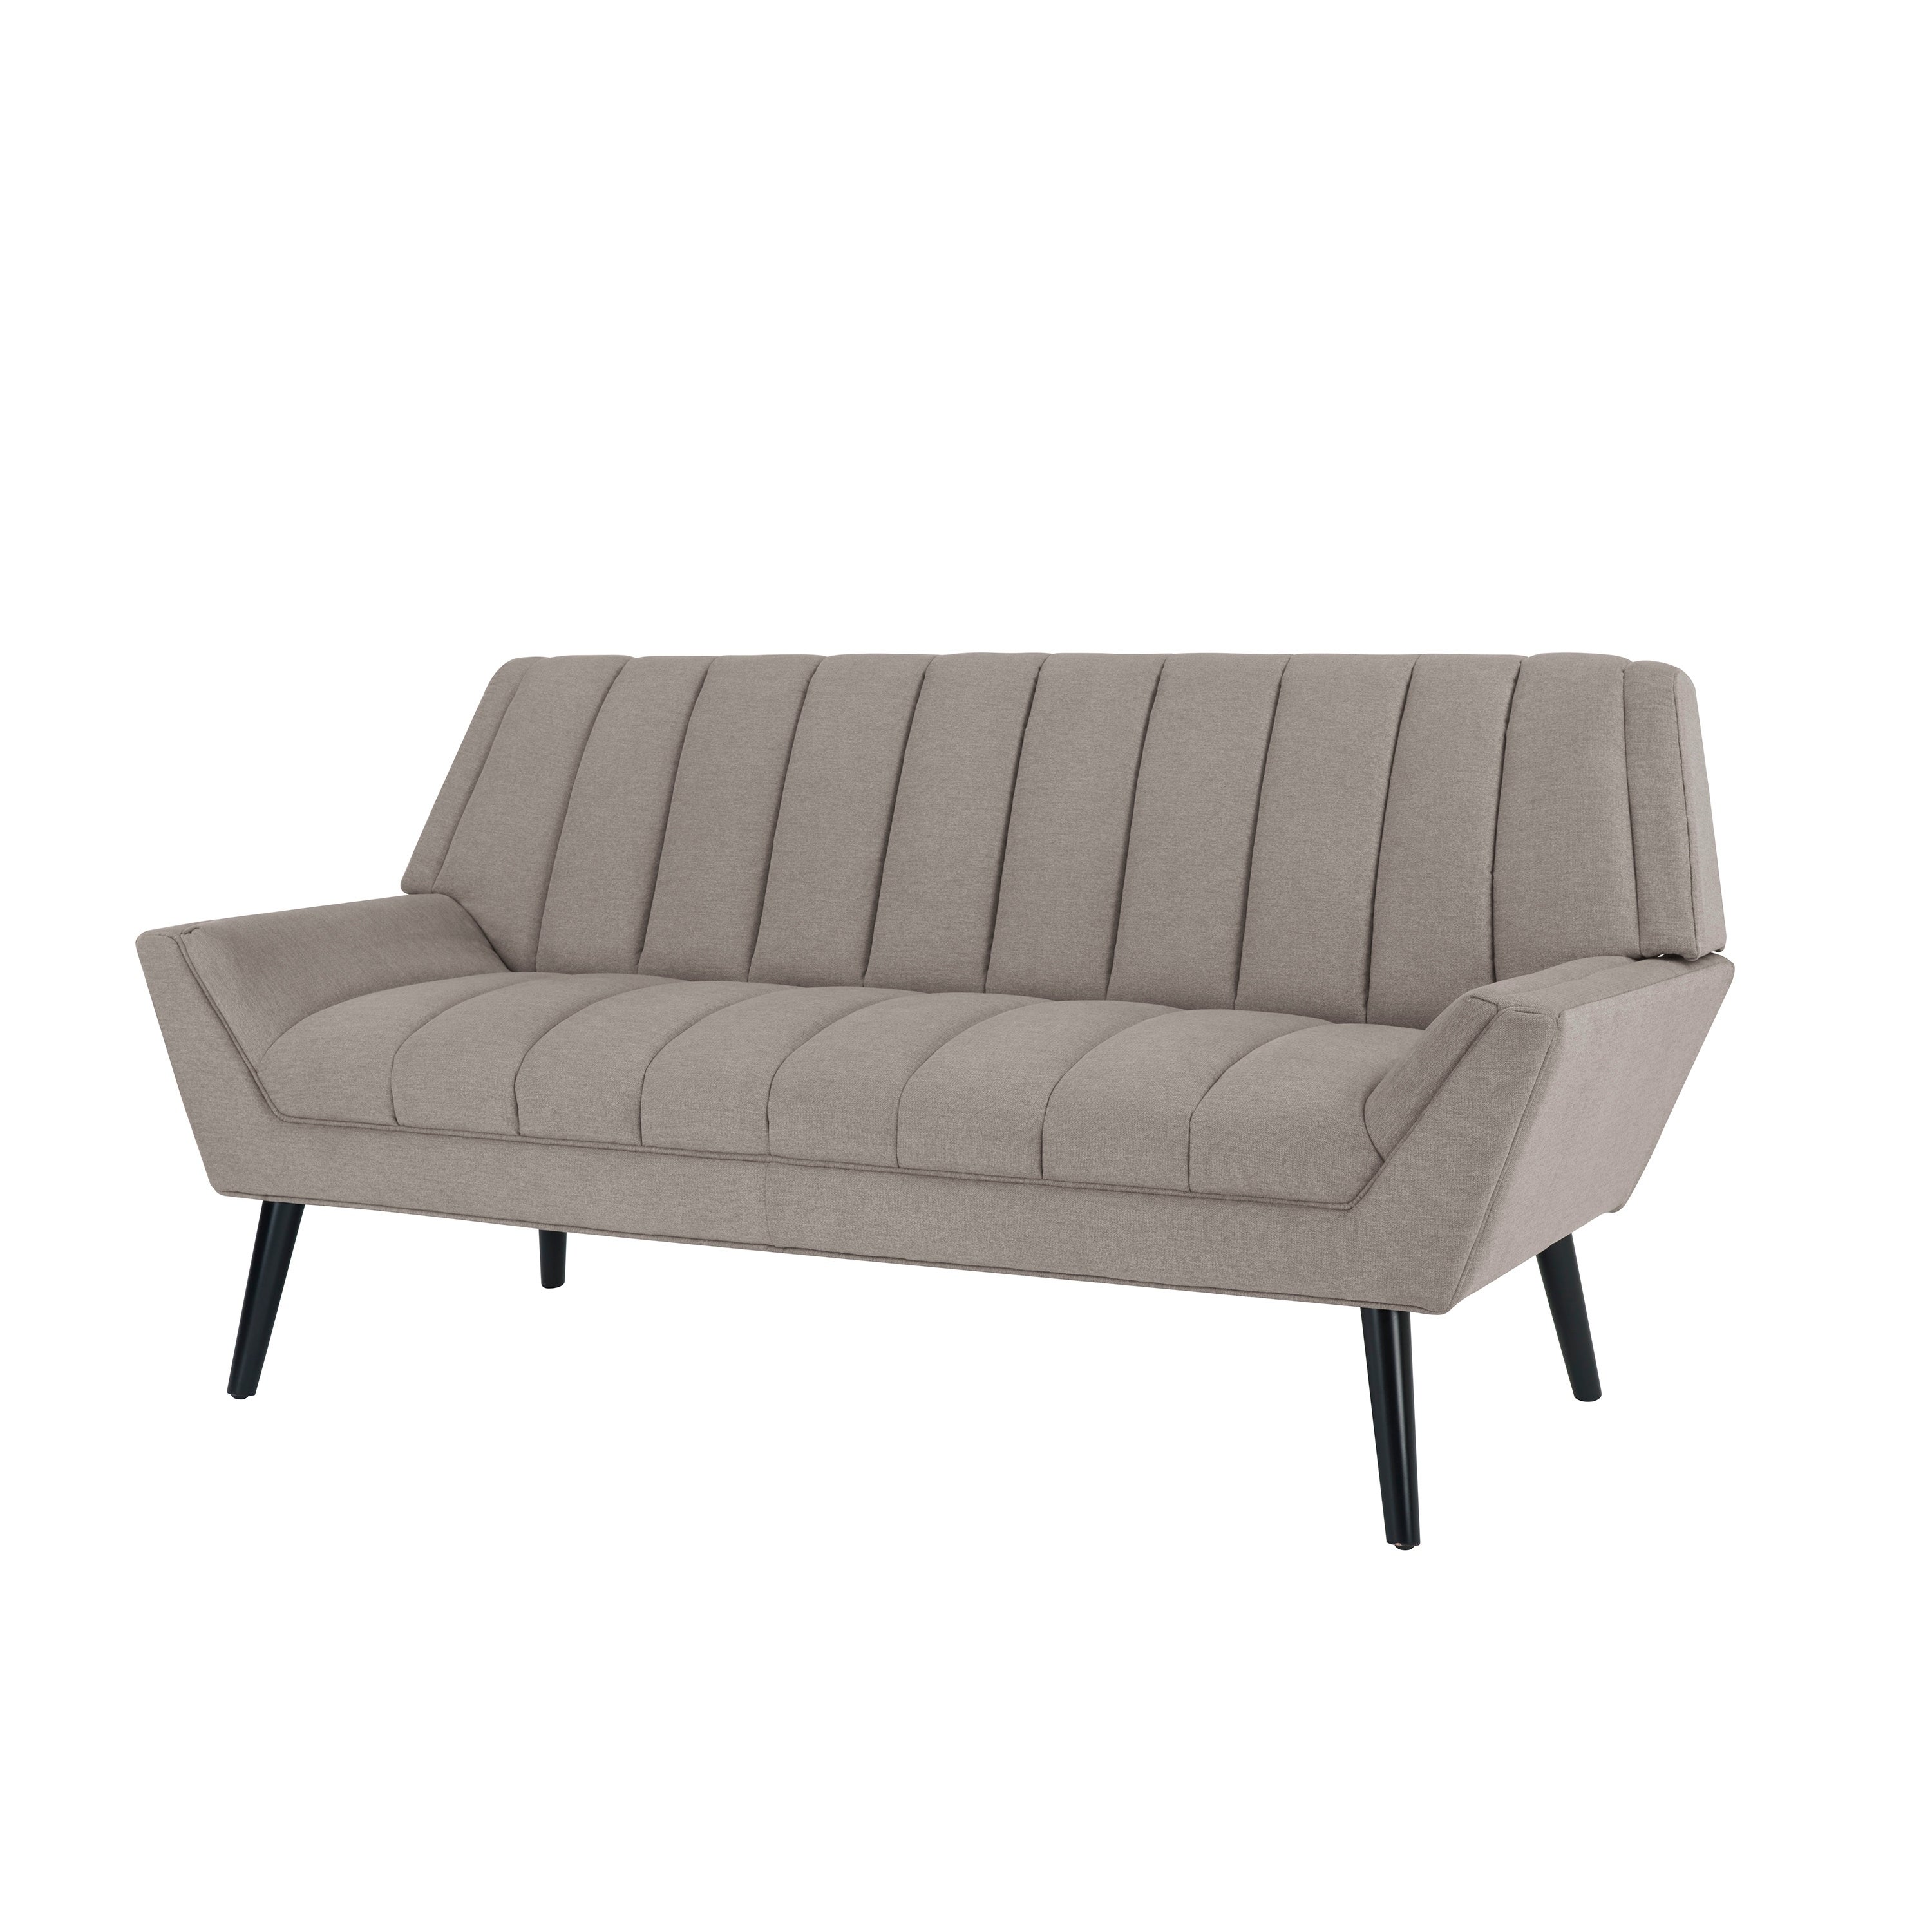 100days Kingbird Furniture Company Brand Green Sectional Sofa Manufacture 7